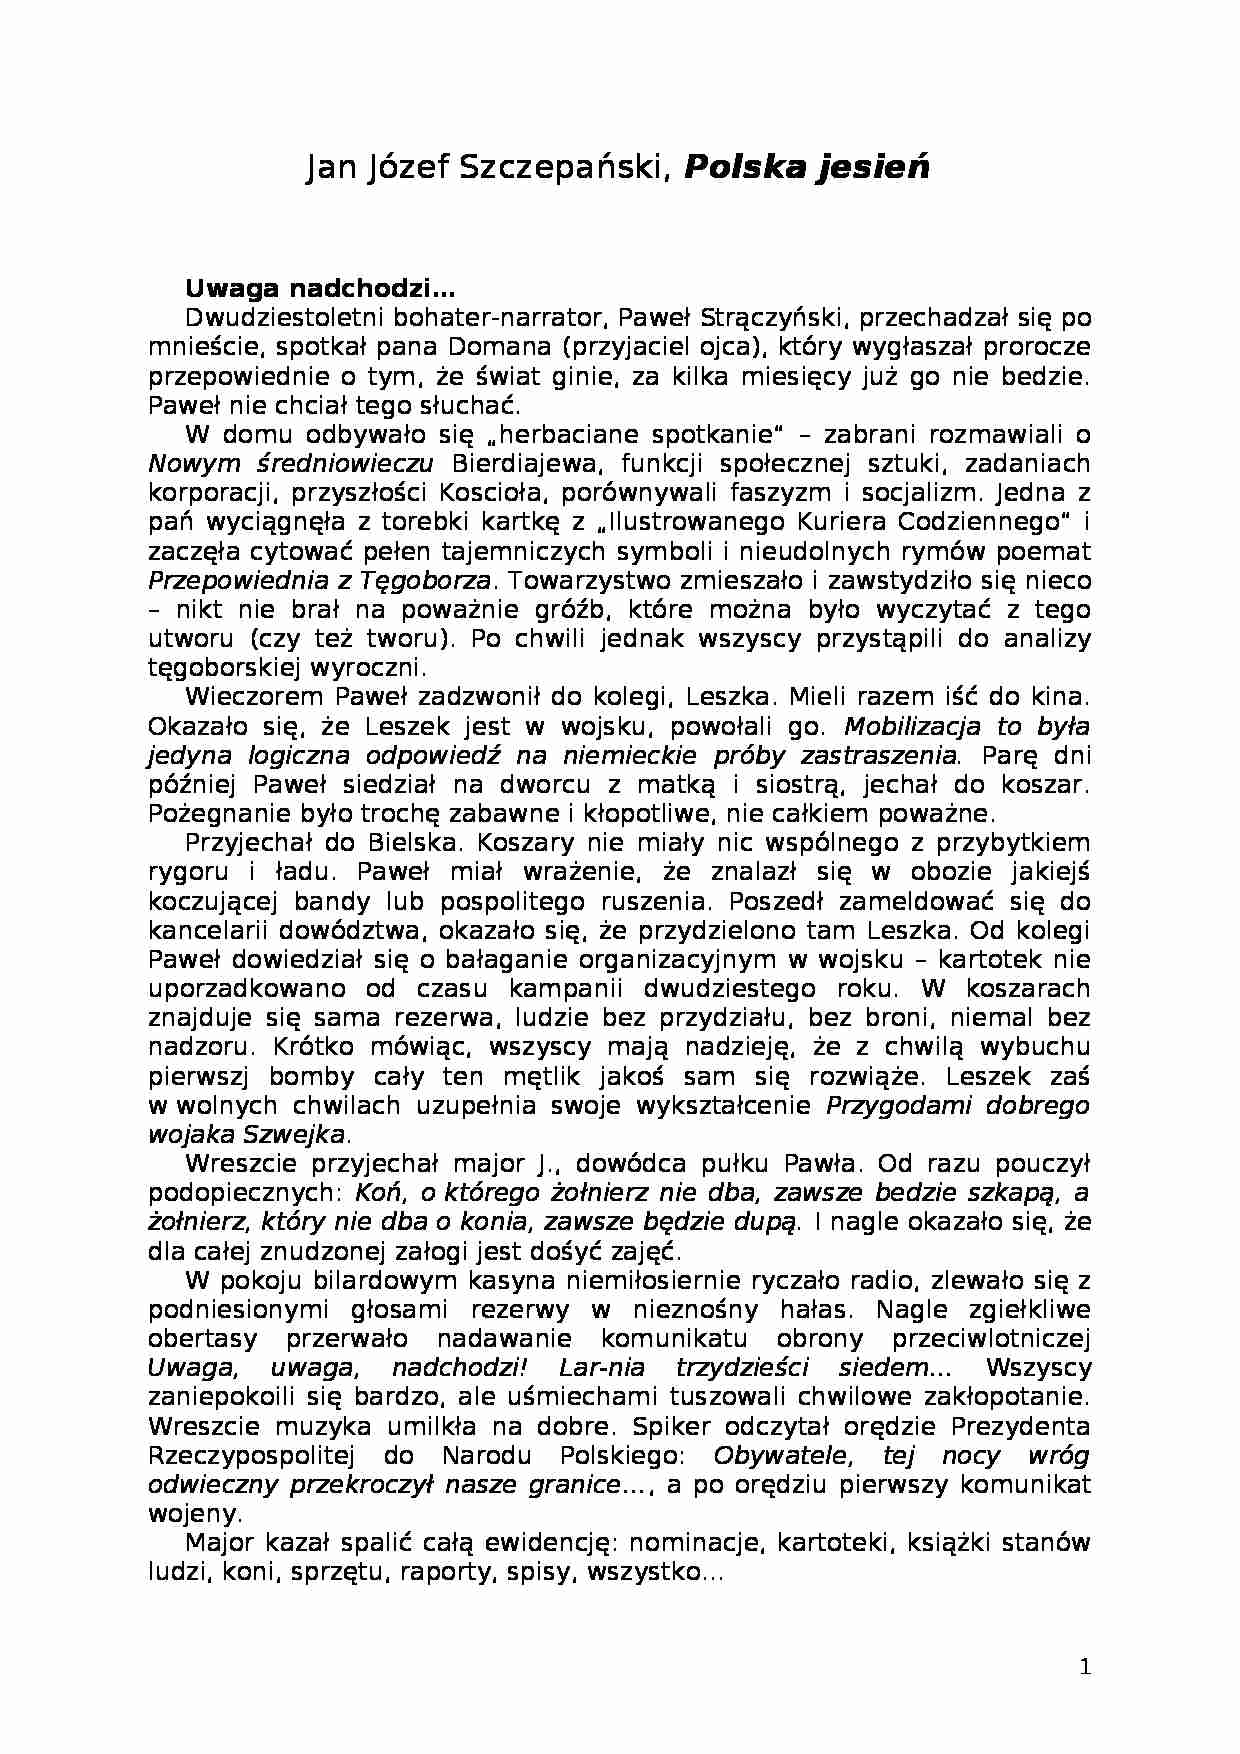 Historia literatury - Polska jesień - strona 1